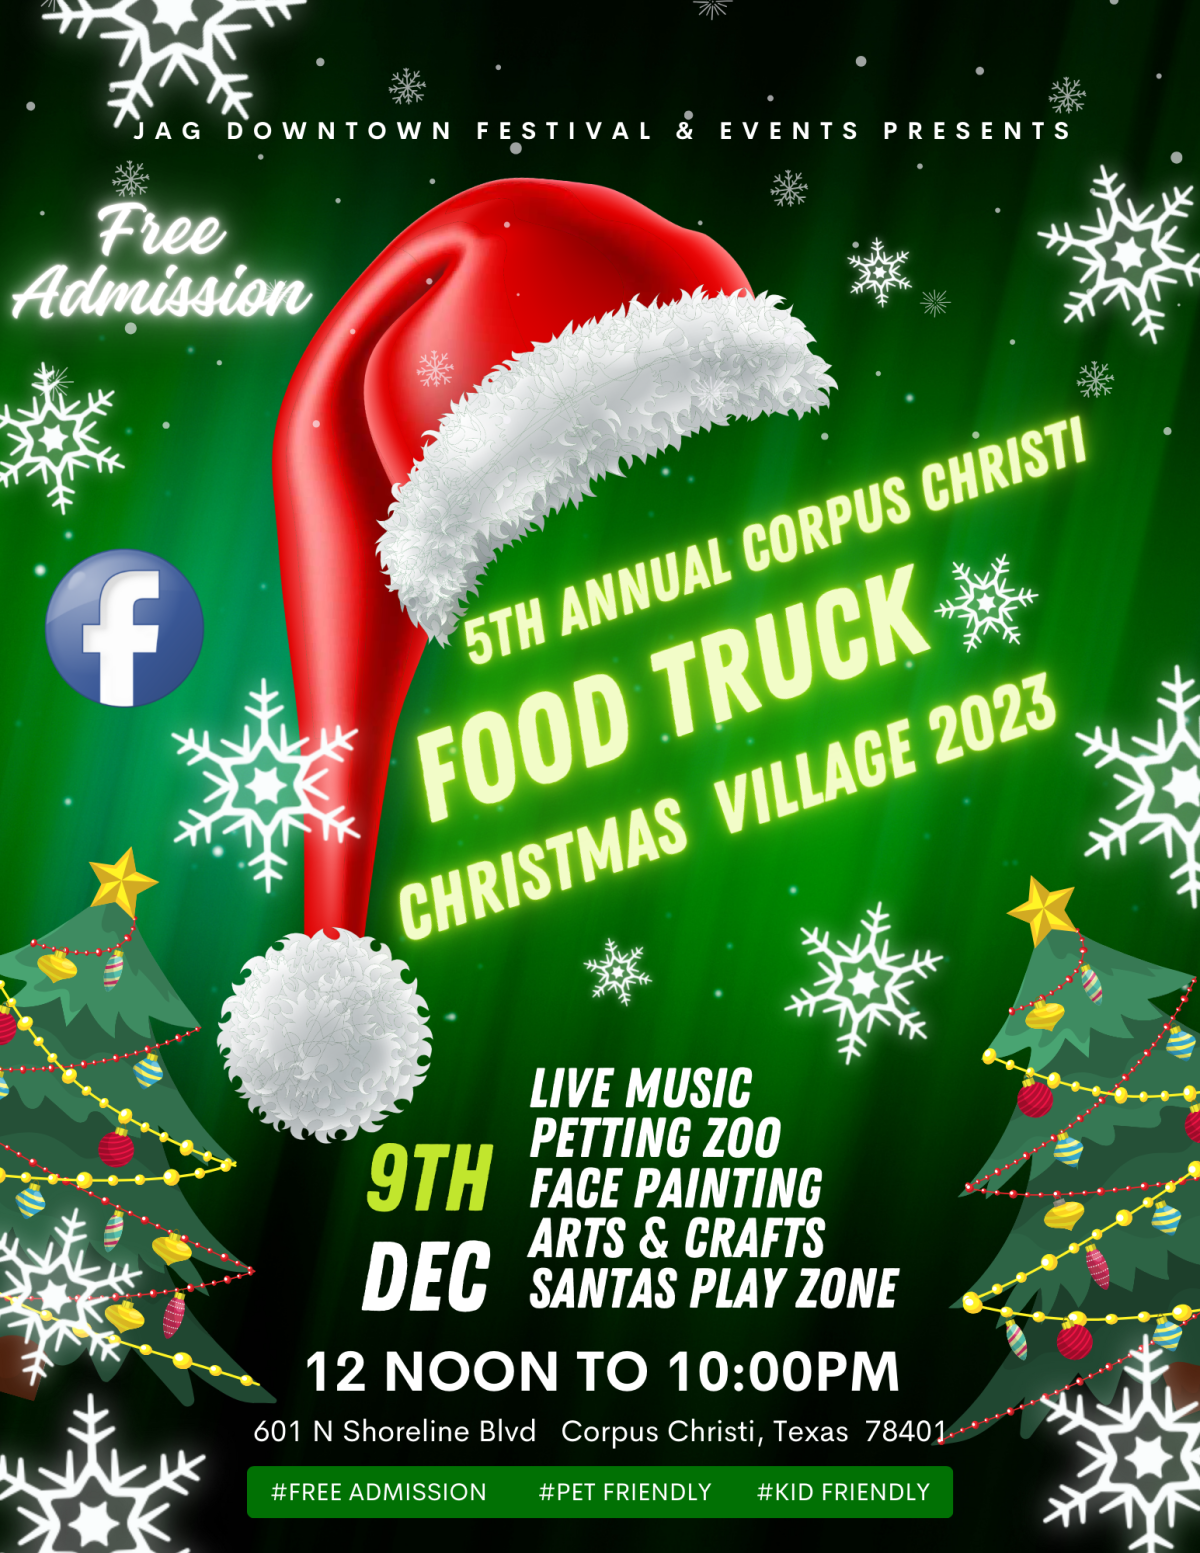 Food Truck Christmas Village